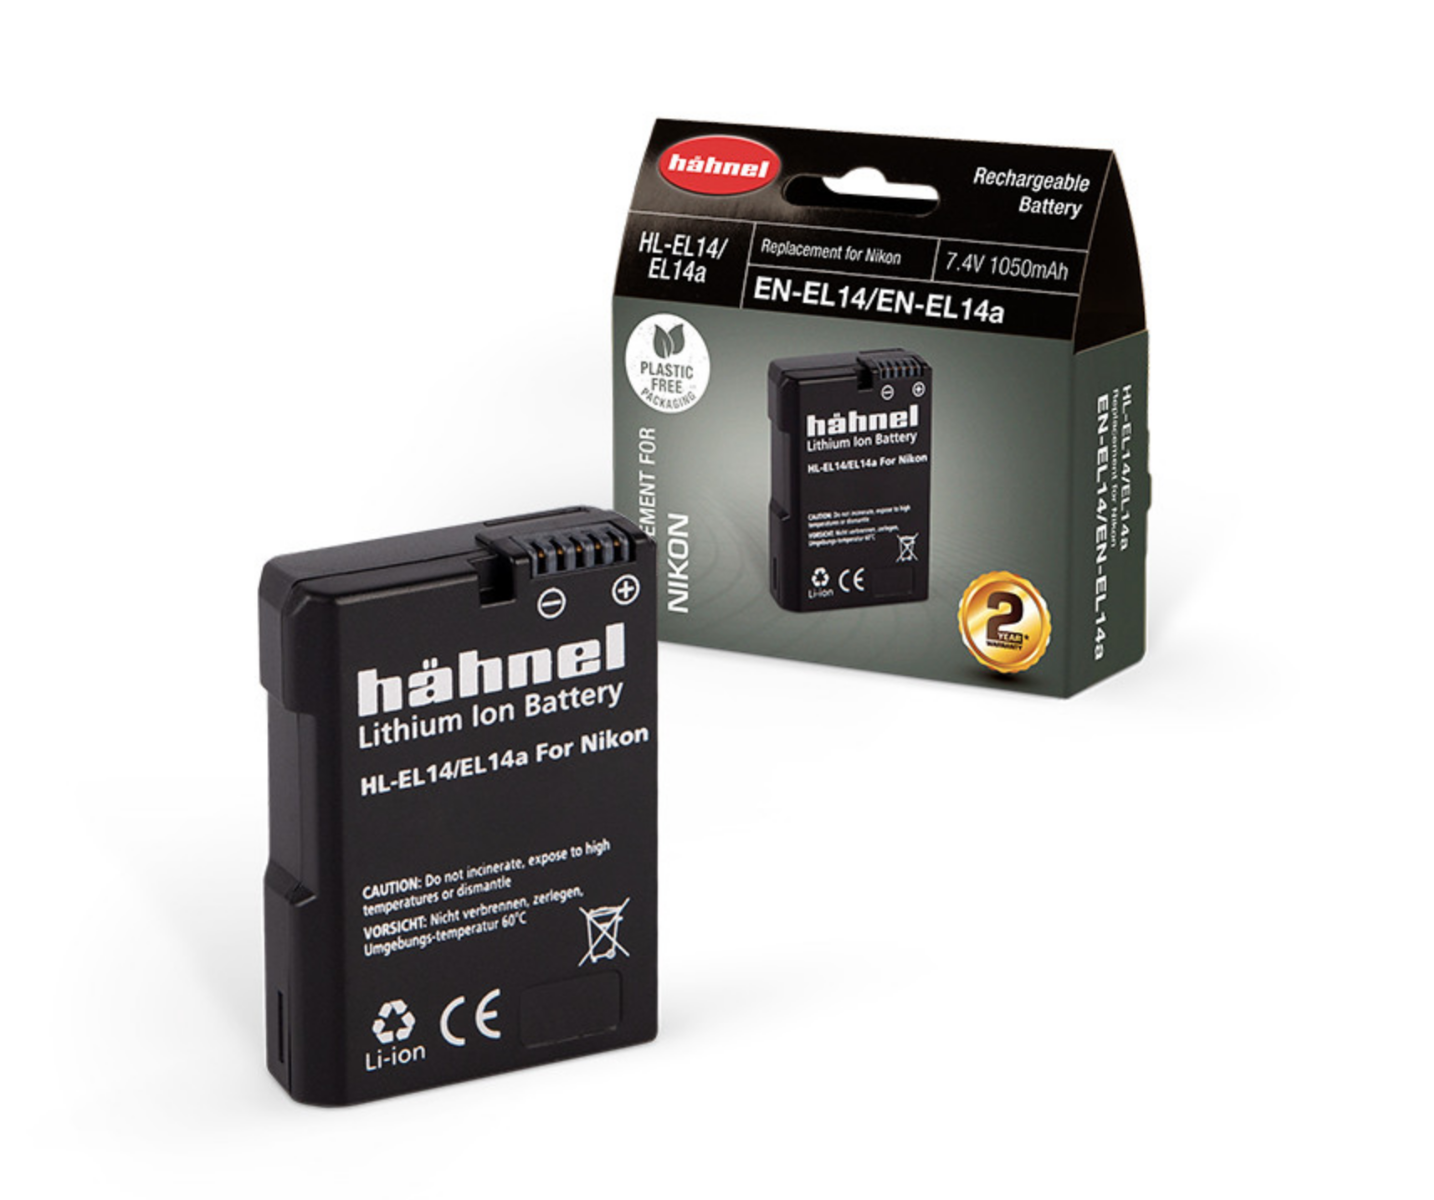 Product Image of Hahnel HL-EL14 Nikon Type Li-ion Battery Replacement for EN-EL14